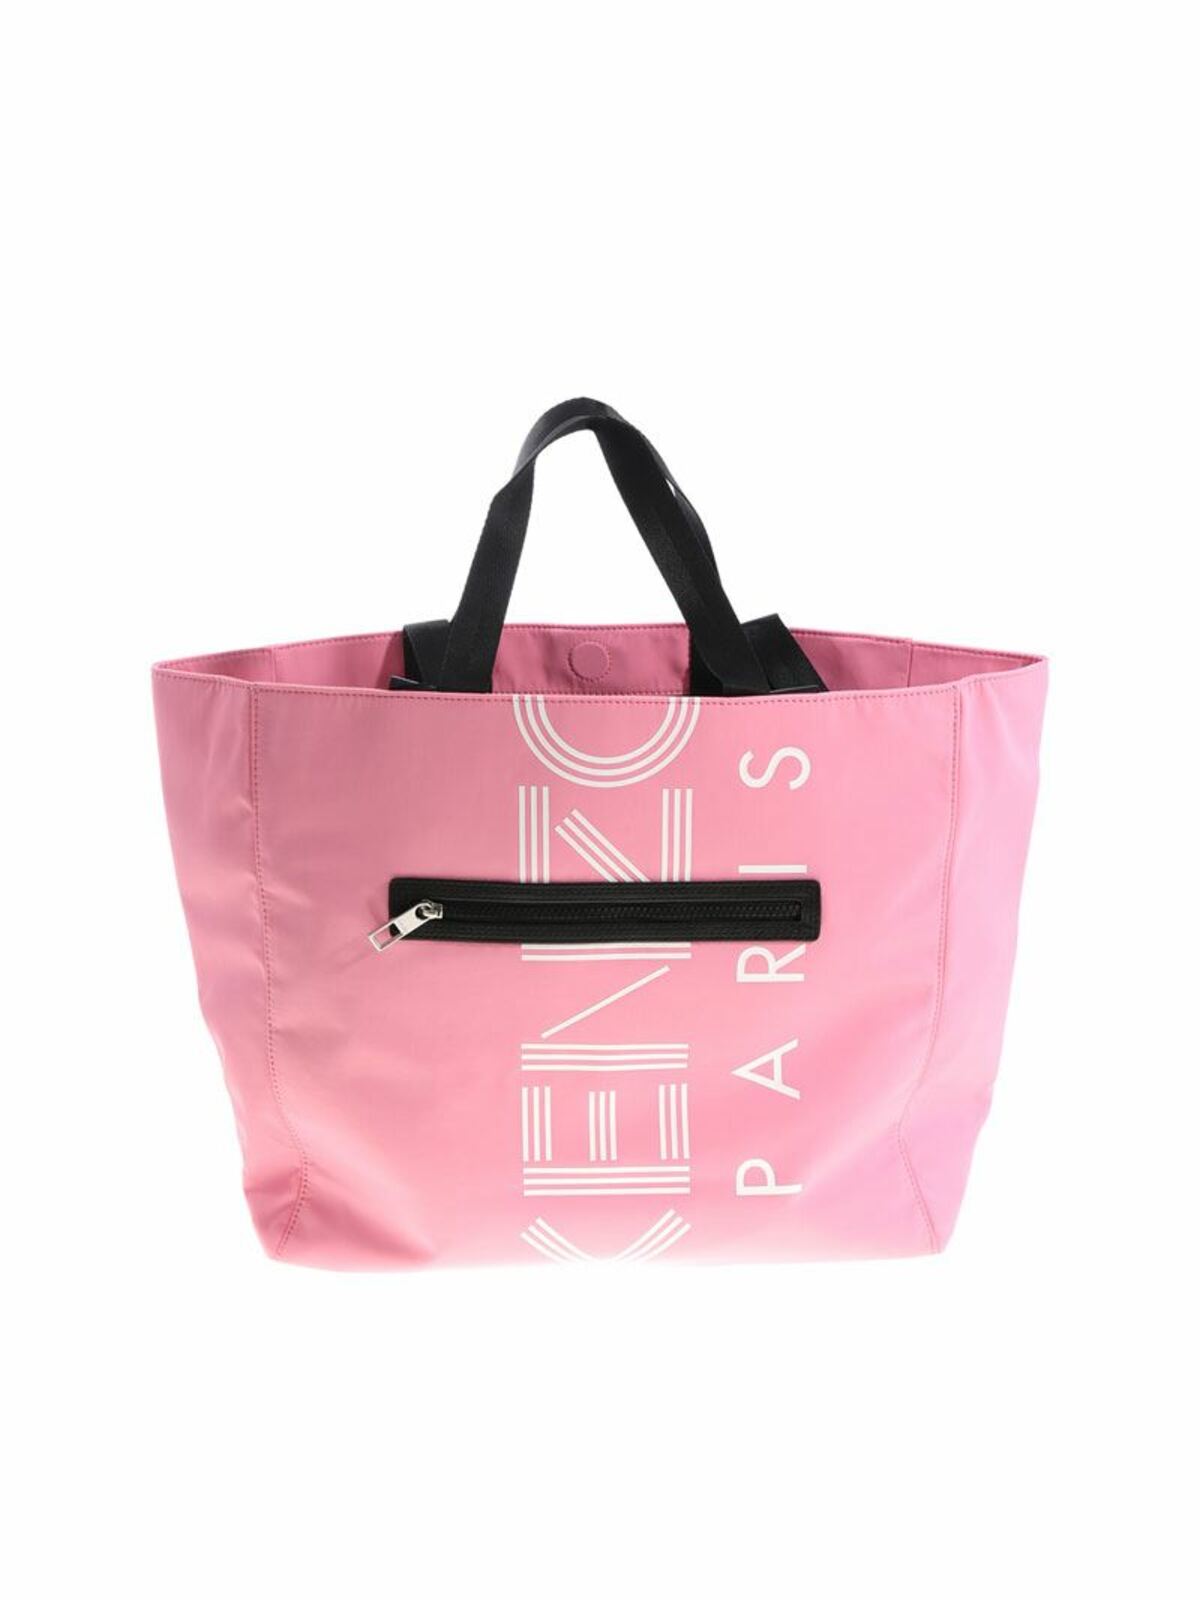 Totes bags Kenzo - Logo tote bag - 5SF219F2432 | Shop online at iKRIX